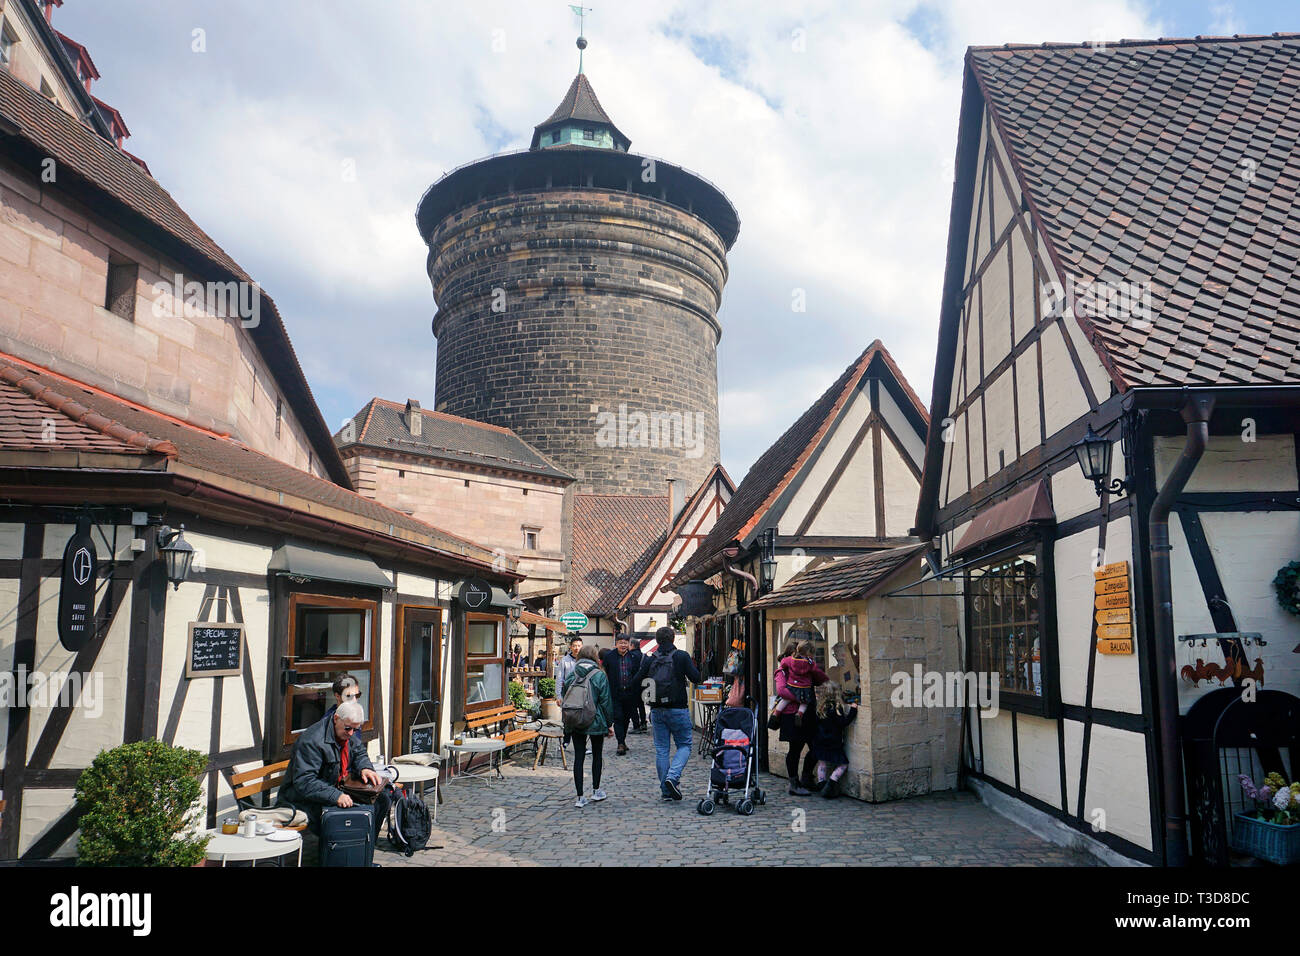 Craftsmen court (german: Handwerkerhof) and Women gate tower (german: Frauentorturm) at old town of Nuremberg, Franconia, Bavaria, Germany Stock Photo